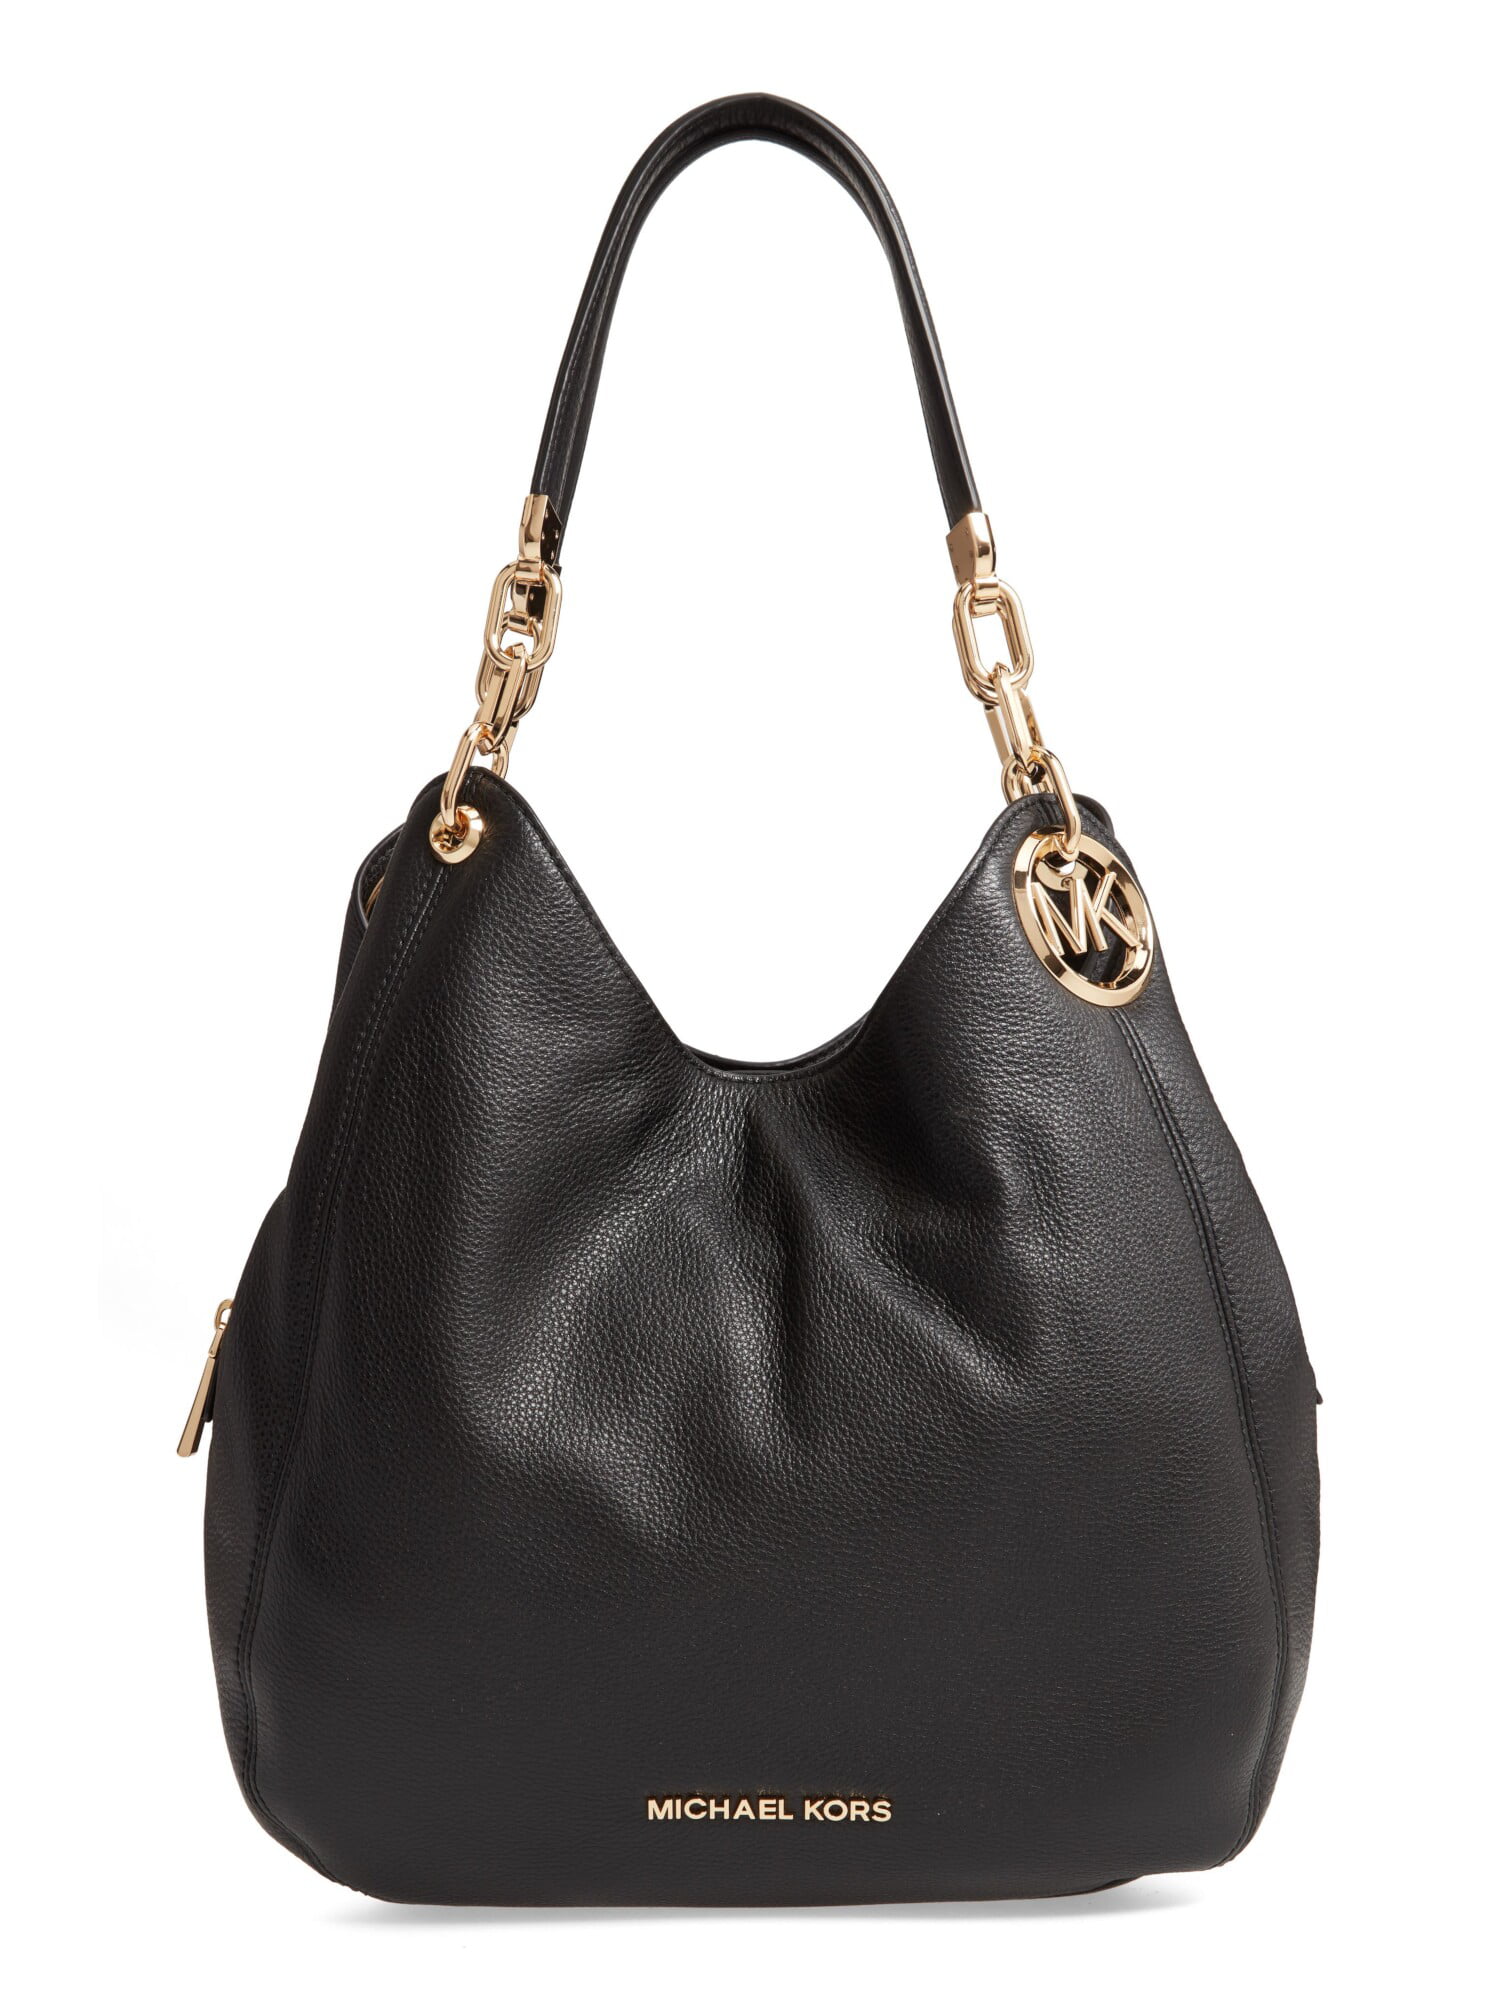 Dare kronblad bue MICHAEL KORS Black Leather Tote Handbag Purse - Walmart.com